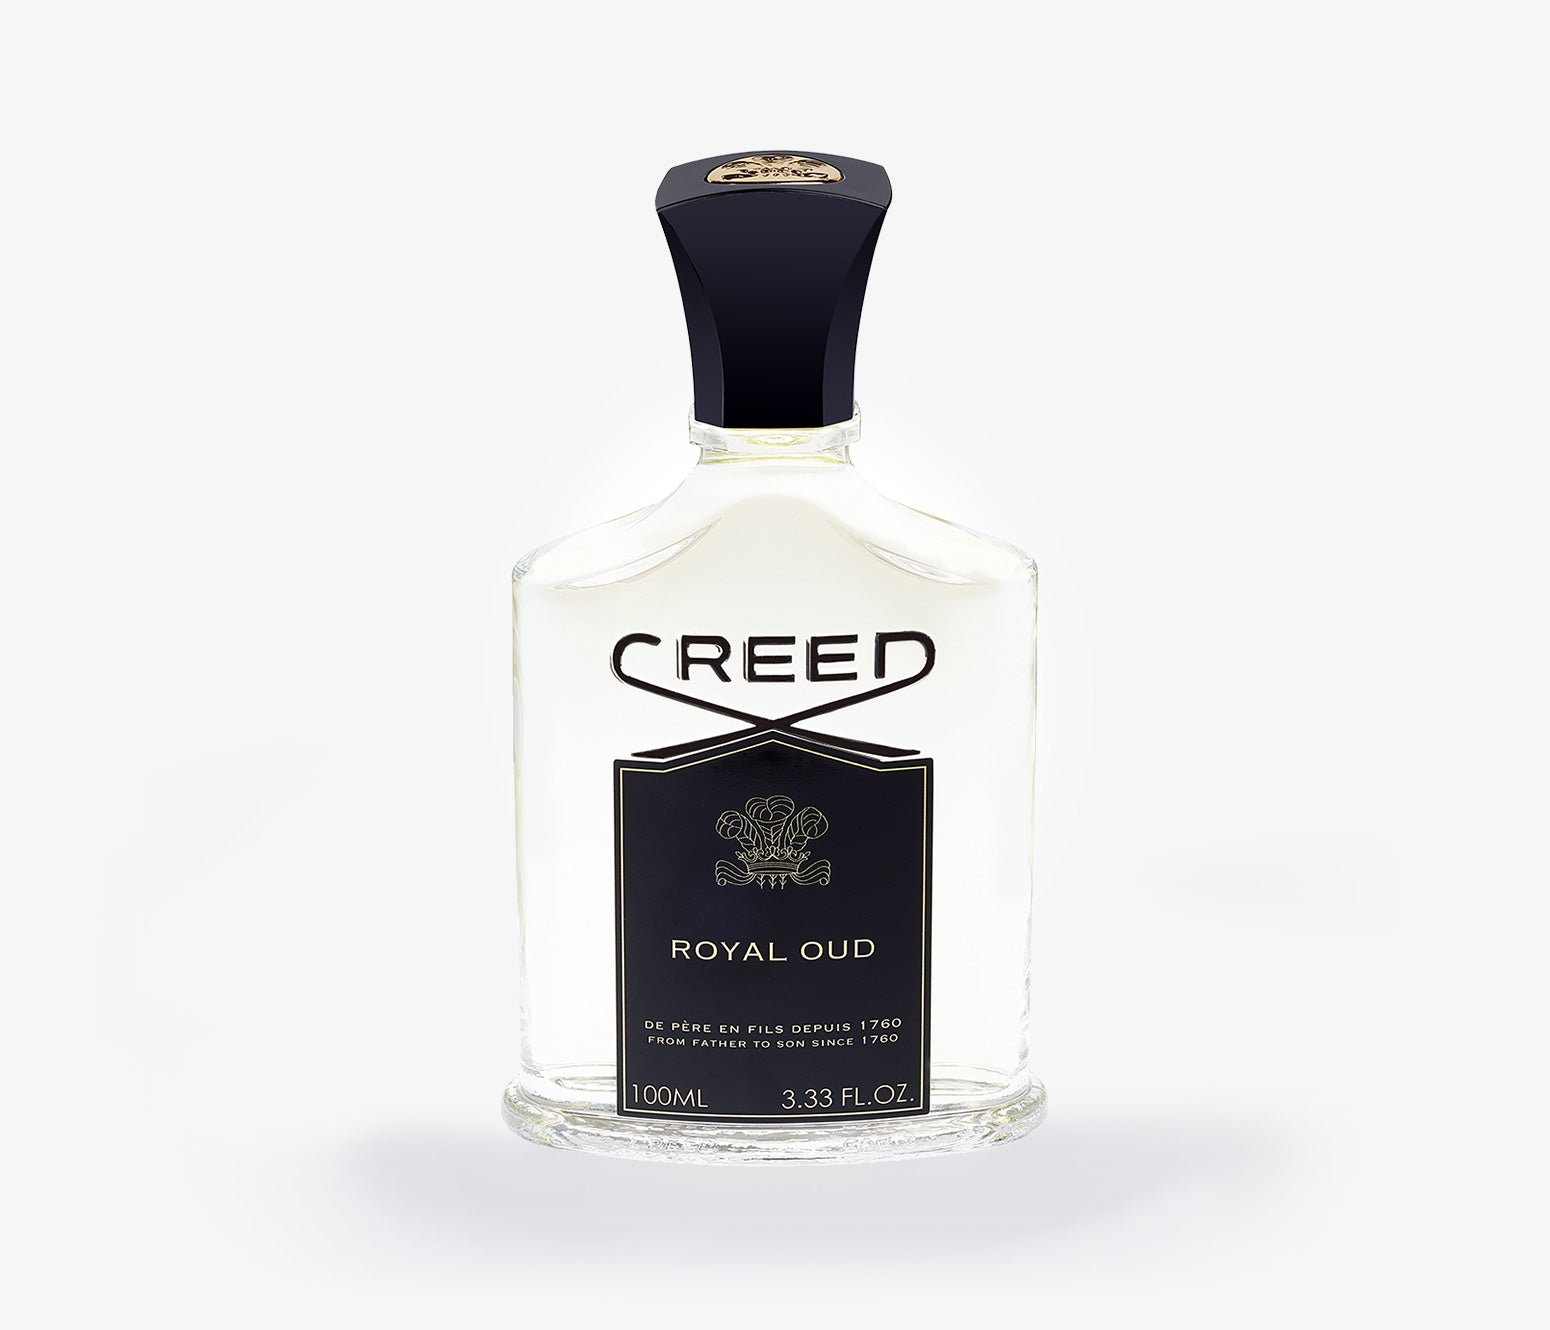 Creed - Royal Oud - 50ml - QQS001 - Product Image - Fragrance - Les Senteurs